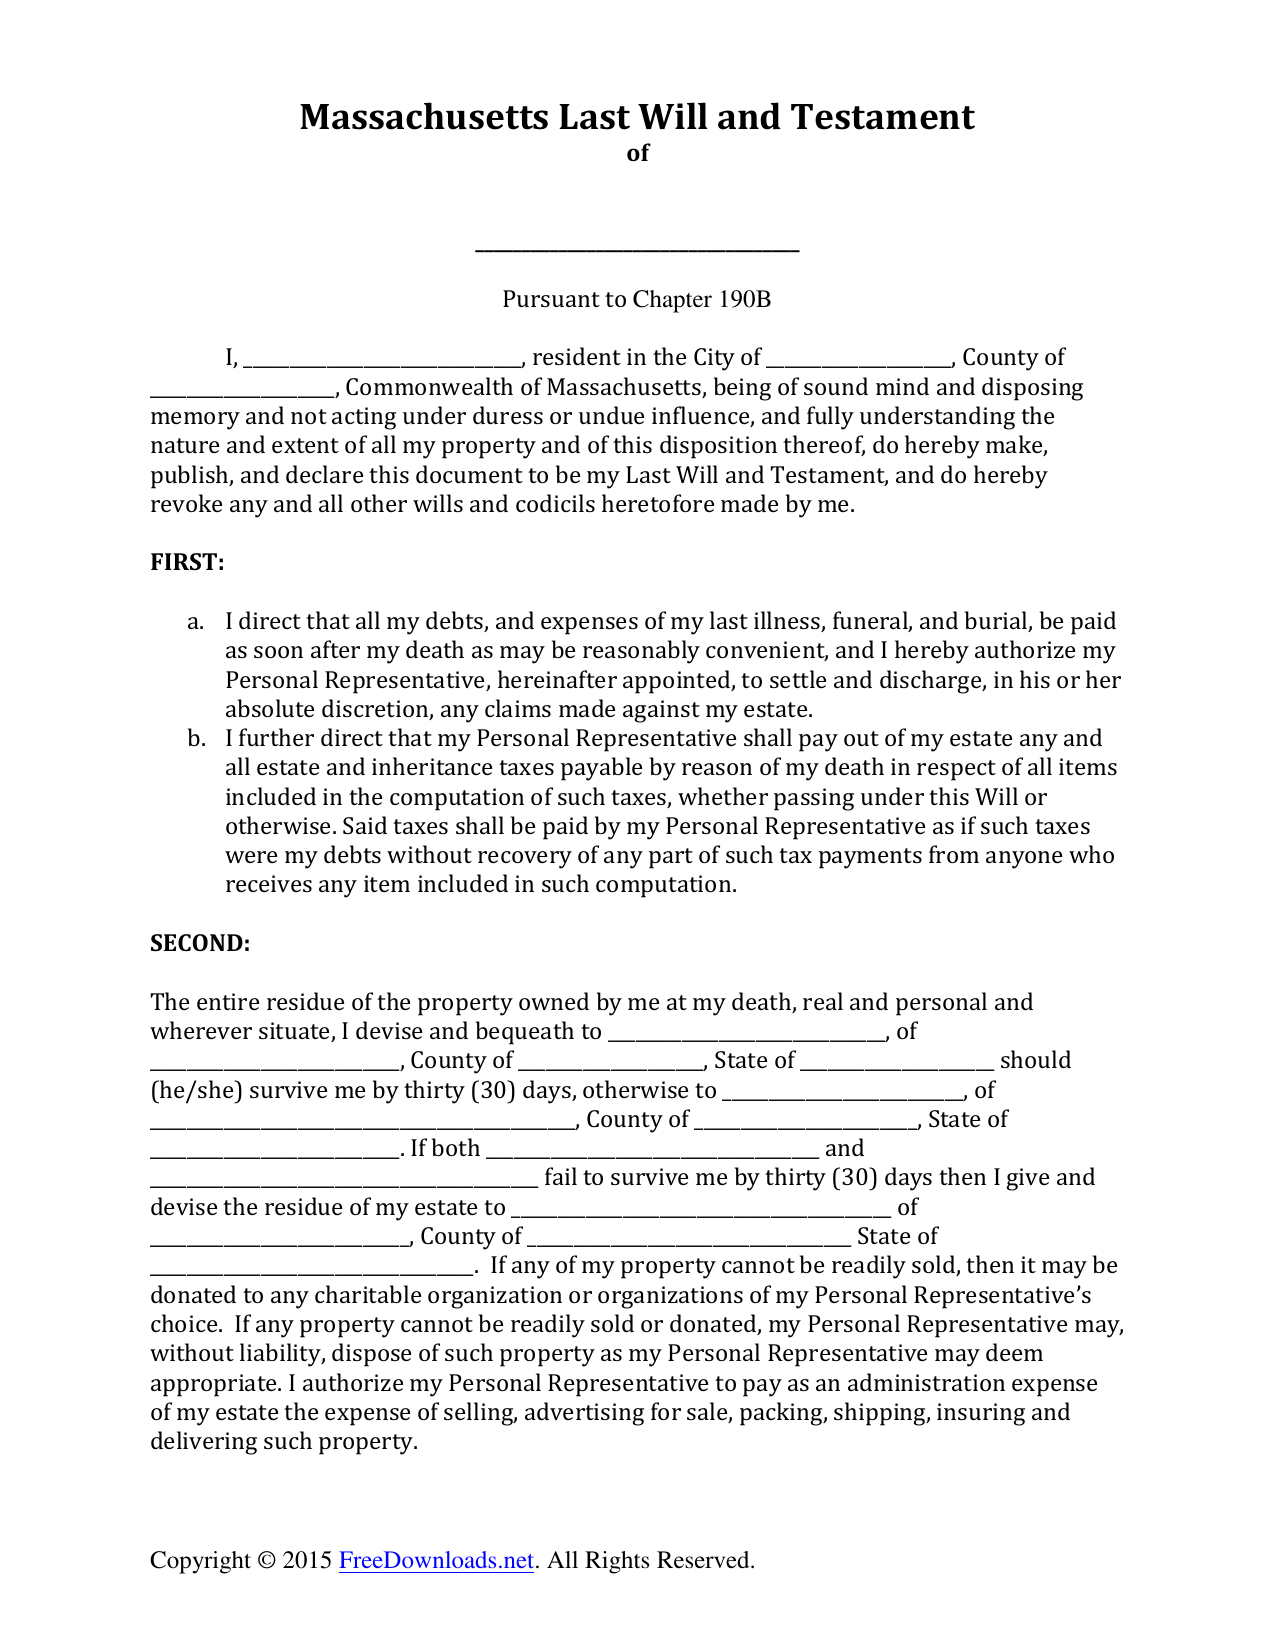 download-massachusetts-last-will-and-testament-form-pdf-rtf-word